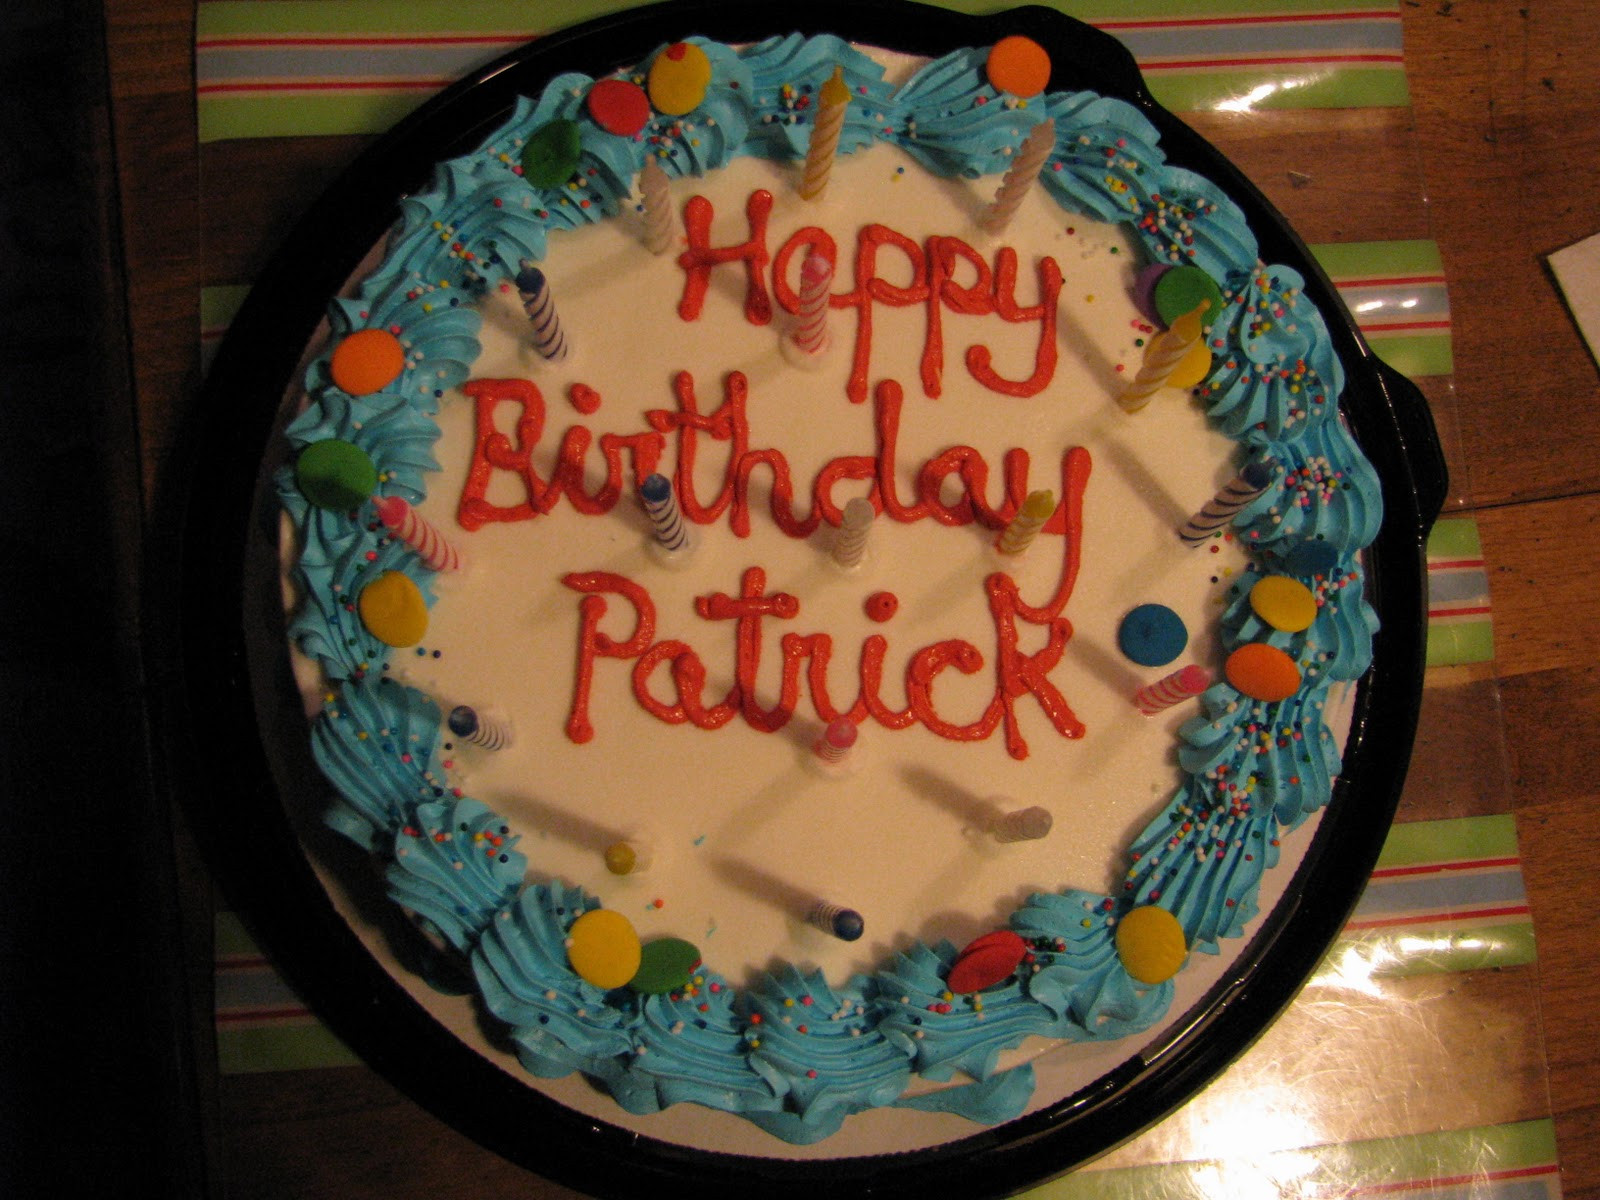 Happy Birthday Patrick Cake
 Five Boys Happy Birthday Patrick